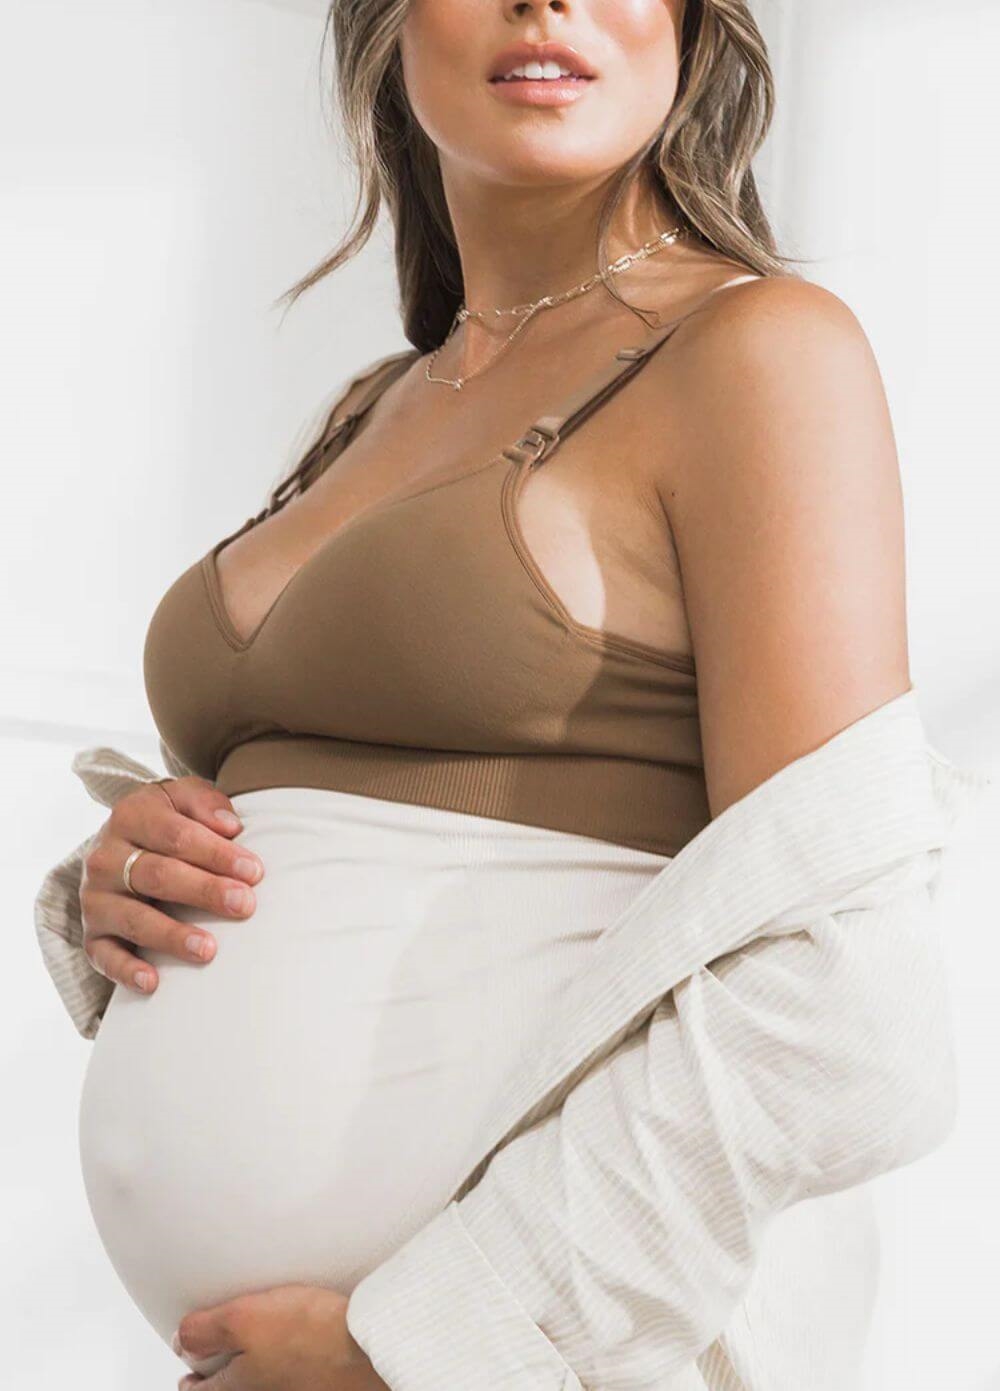 Mums & Bumps Blanqi Postpartum Belly Support Girlshort Black